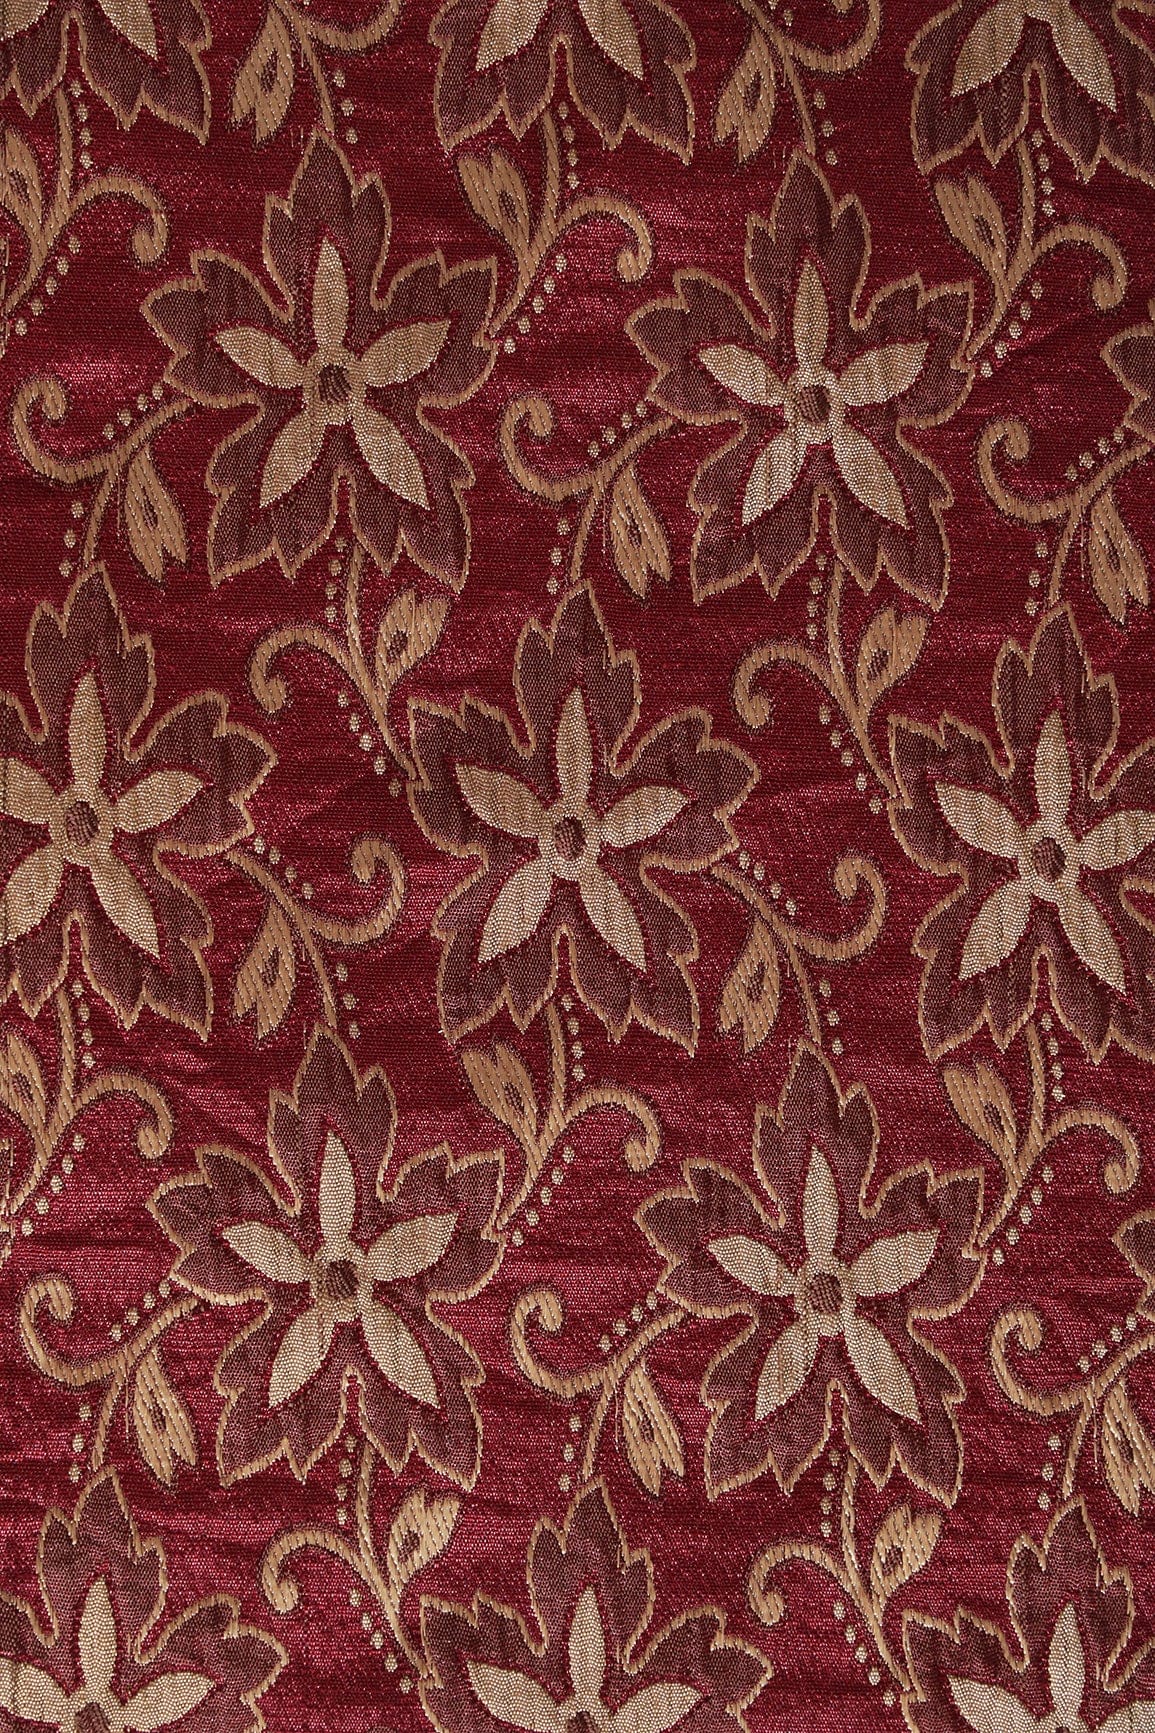 doeraa Banarasi Fabrics 1 Meter Cut Piece Of Maroon Floral Double Cloth Jacquard Banarasi Fabric